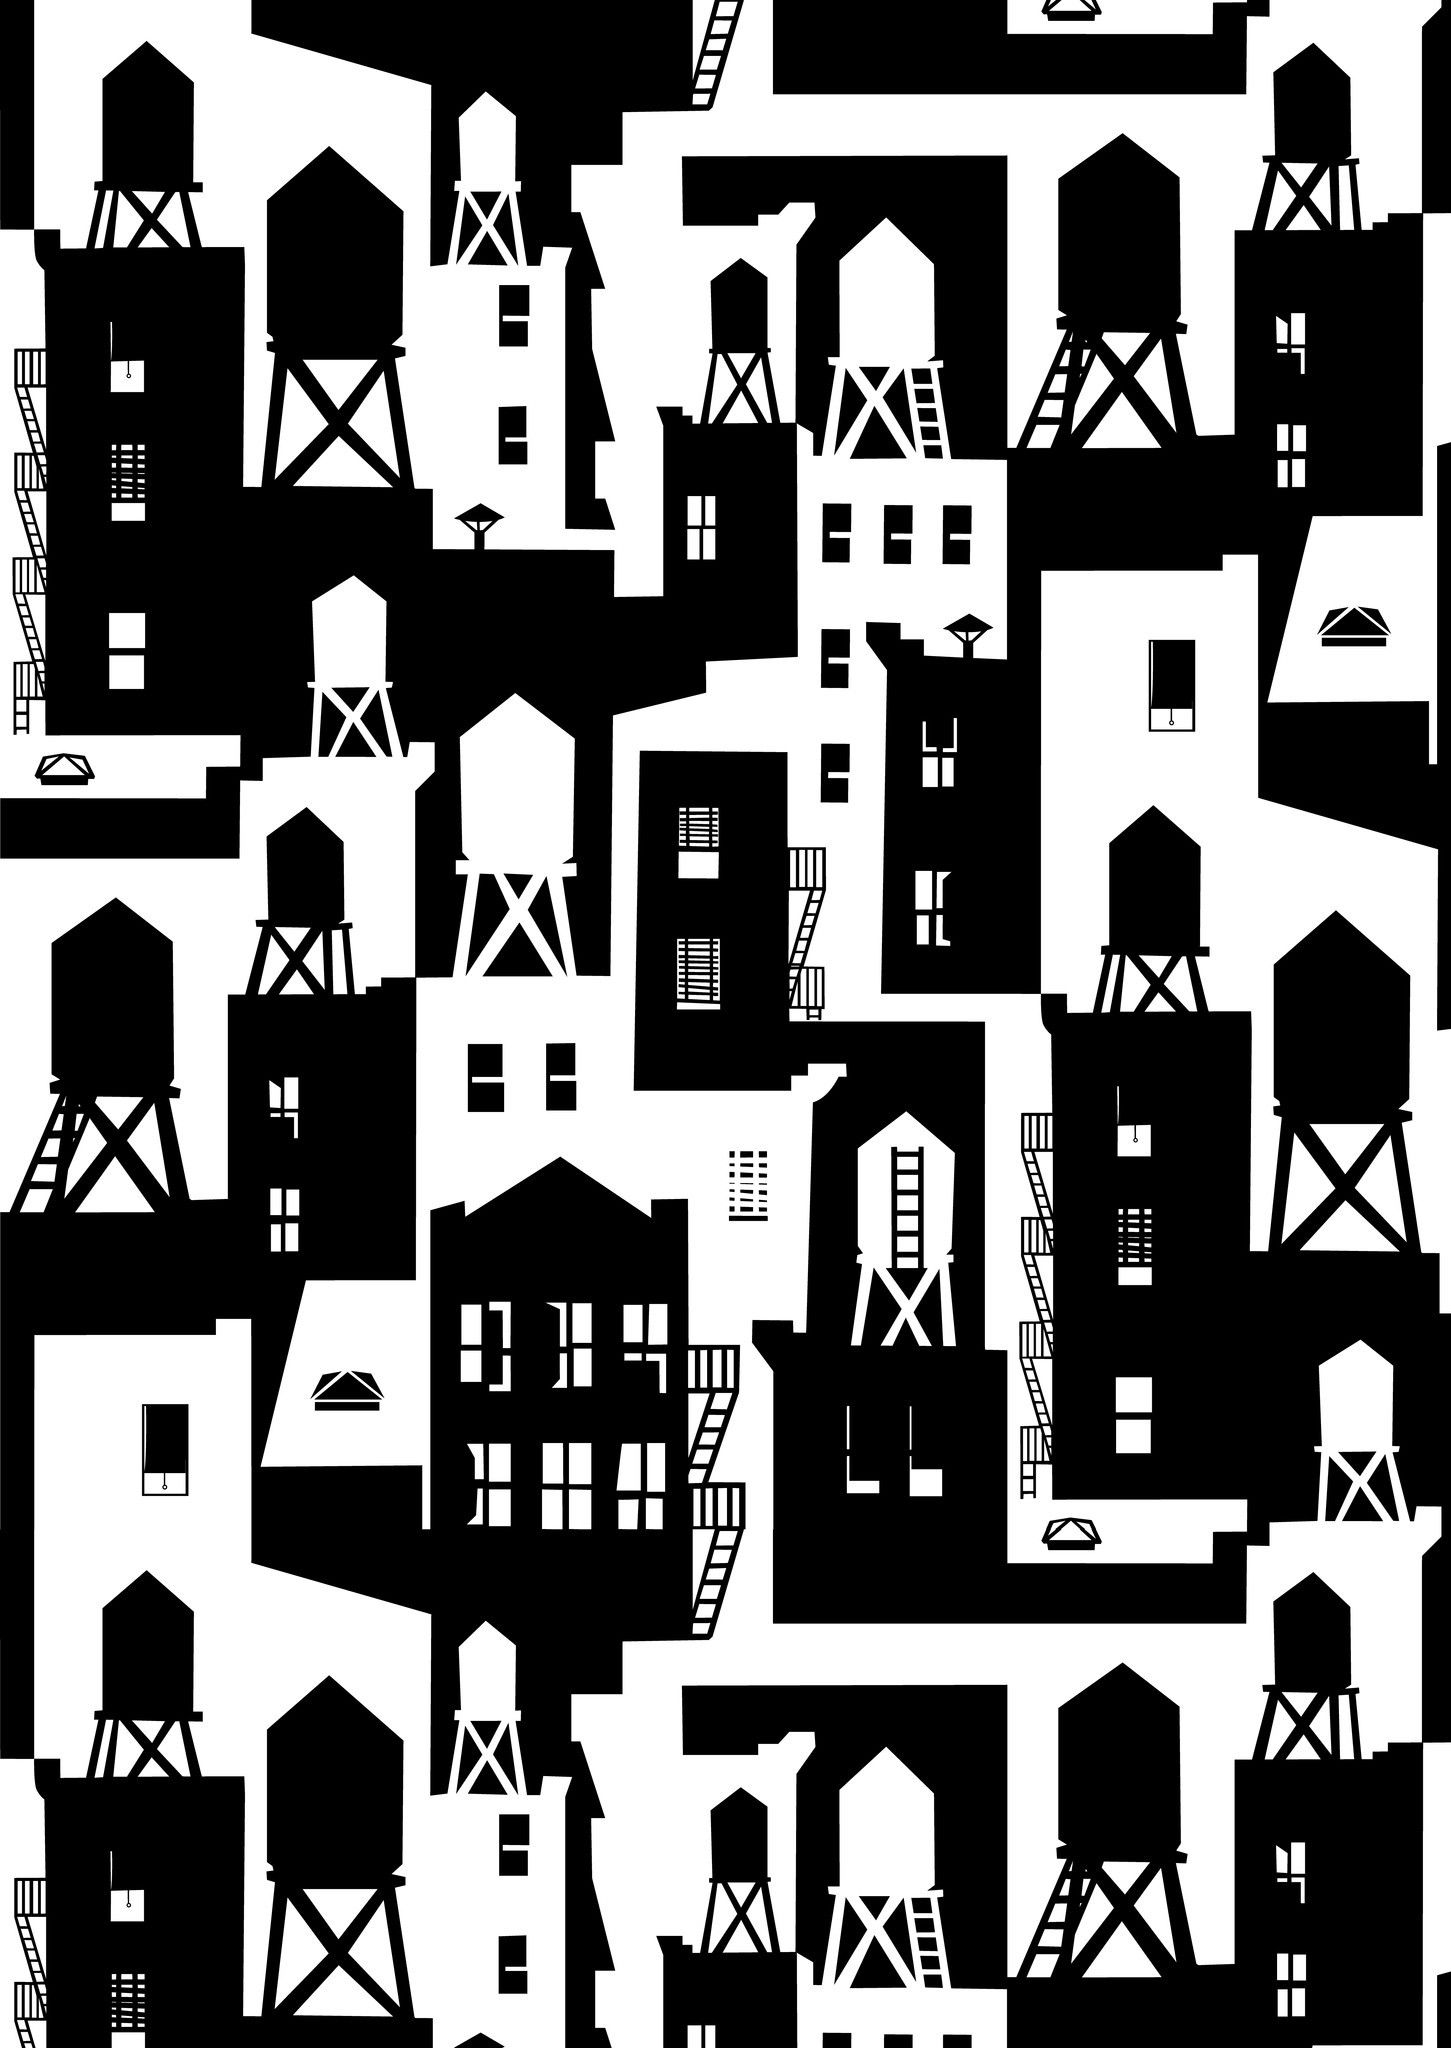 New York City Watertowers Wallpaper in Black & White design by Tom